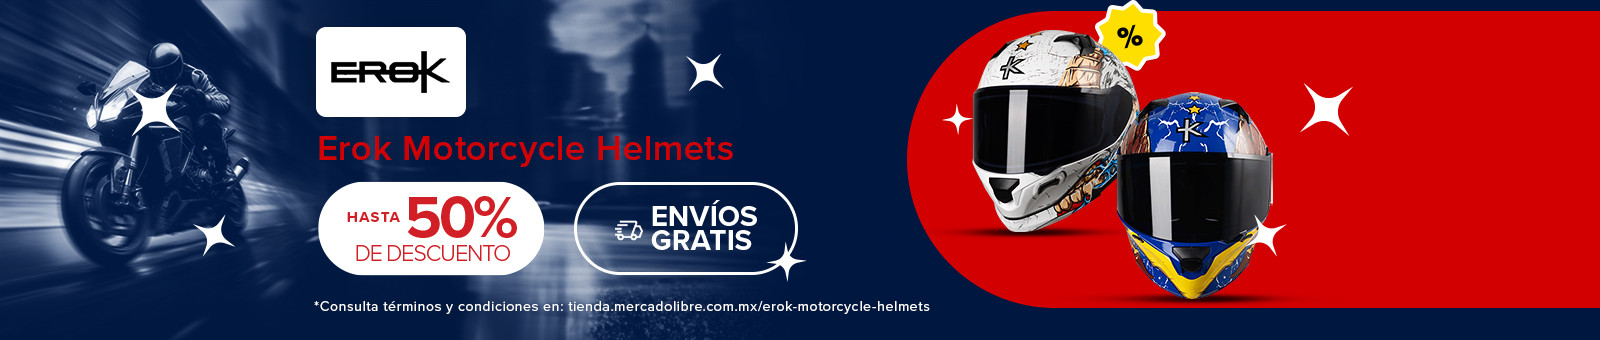 Header_erok-motorcycle-helmets